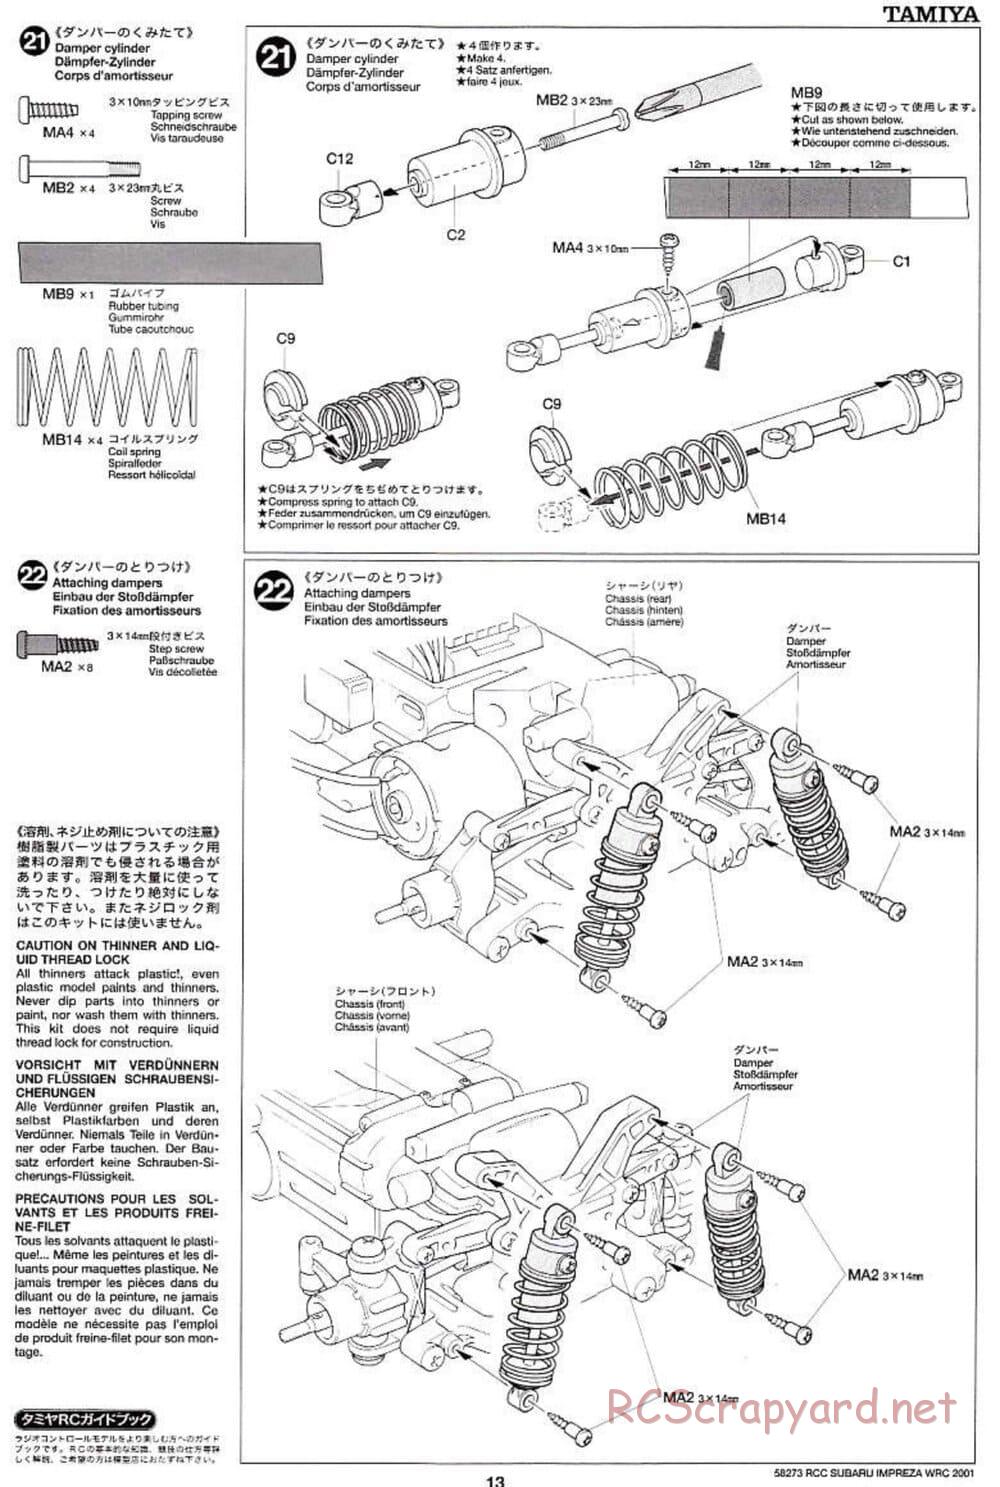 Tamiya - Subaru Impreza WRC 2001 - TL-01 Chassis - Manual - Page 13